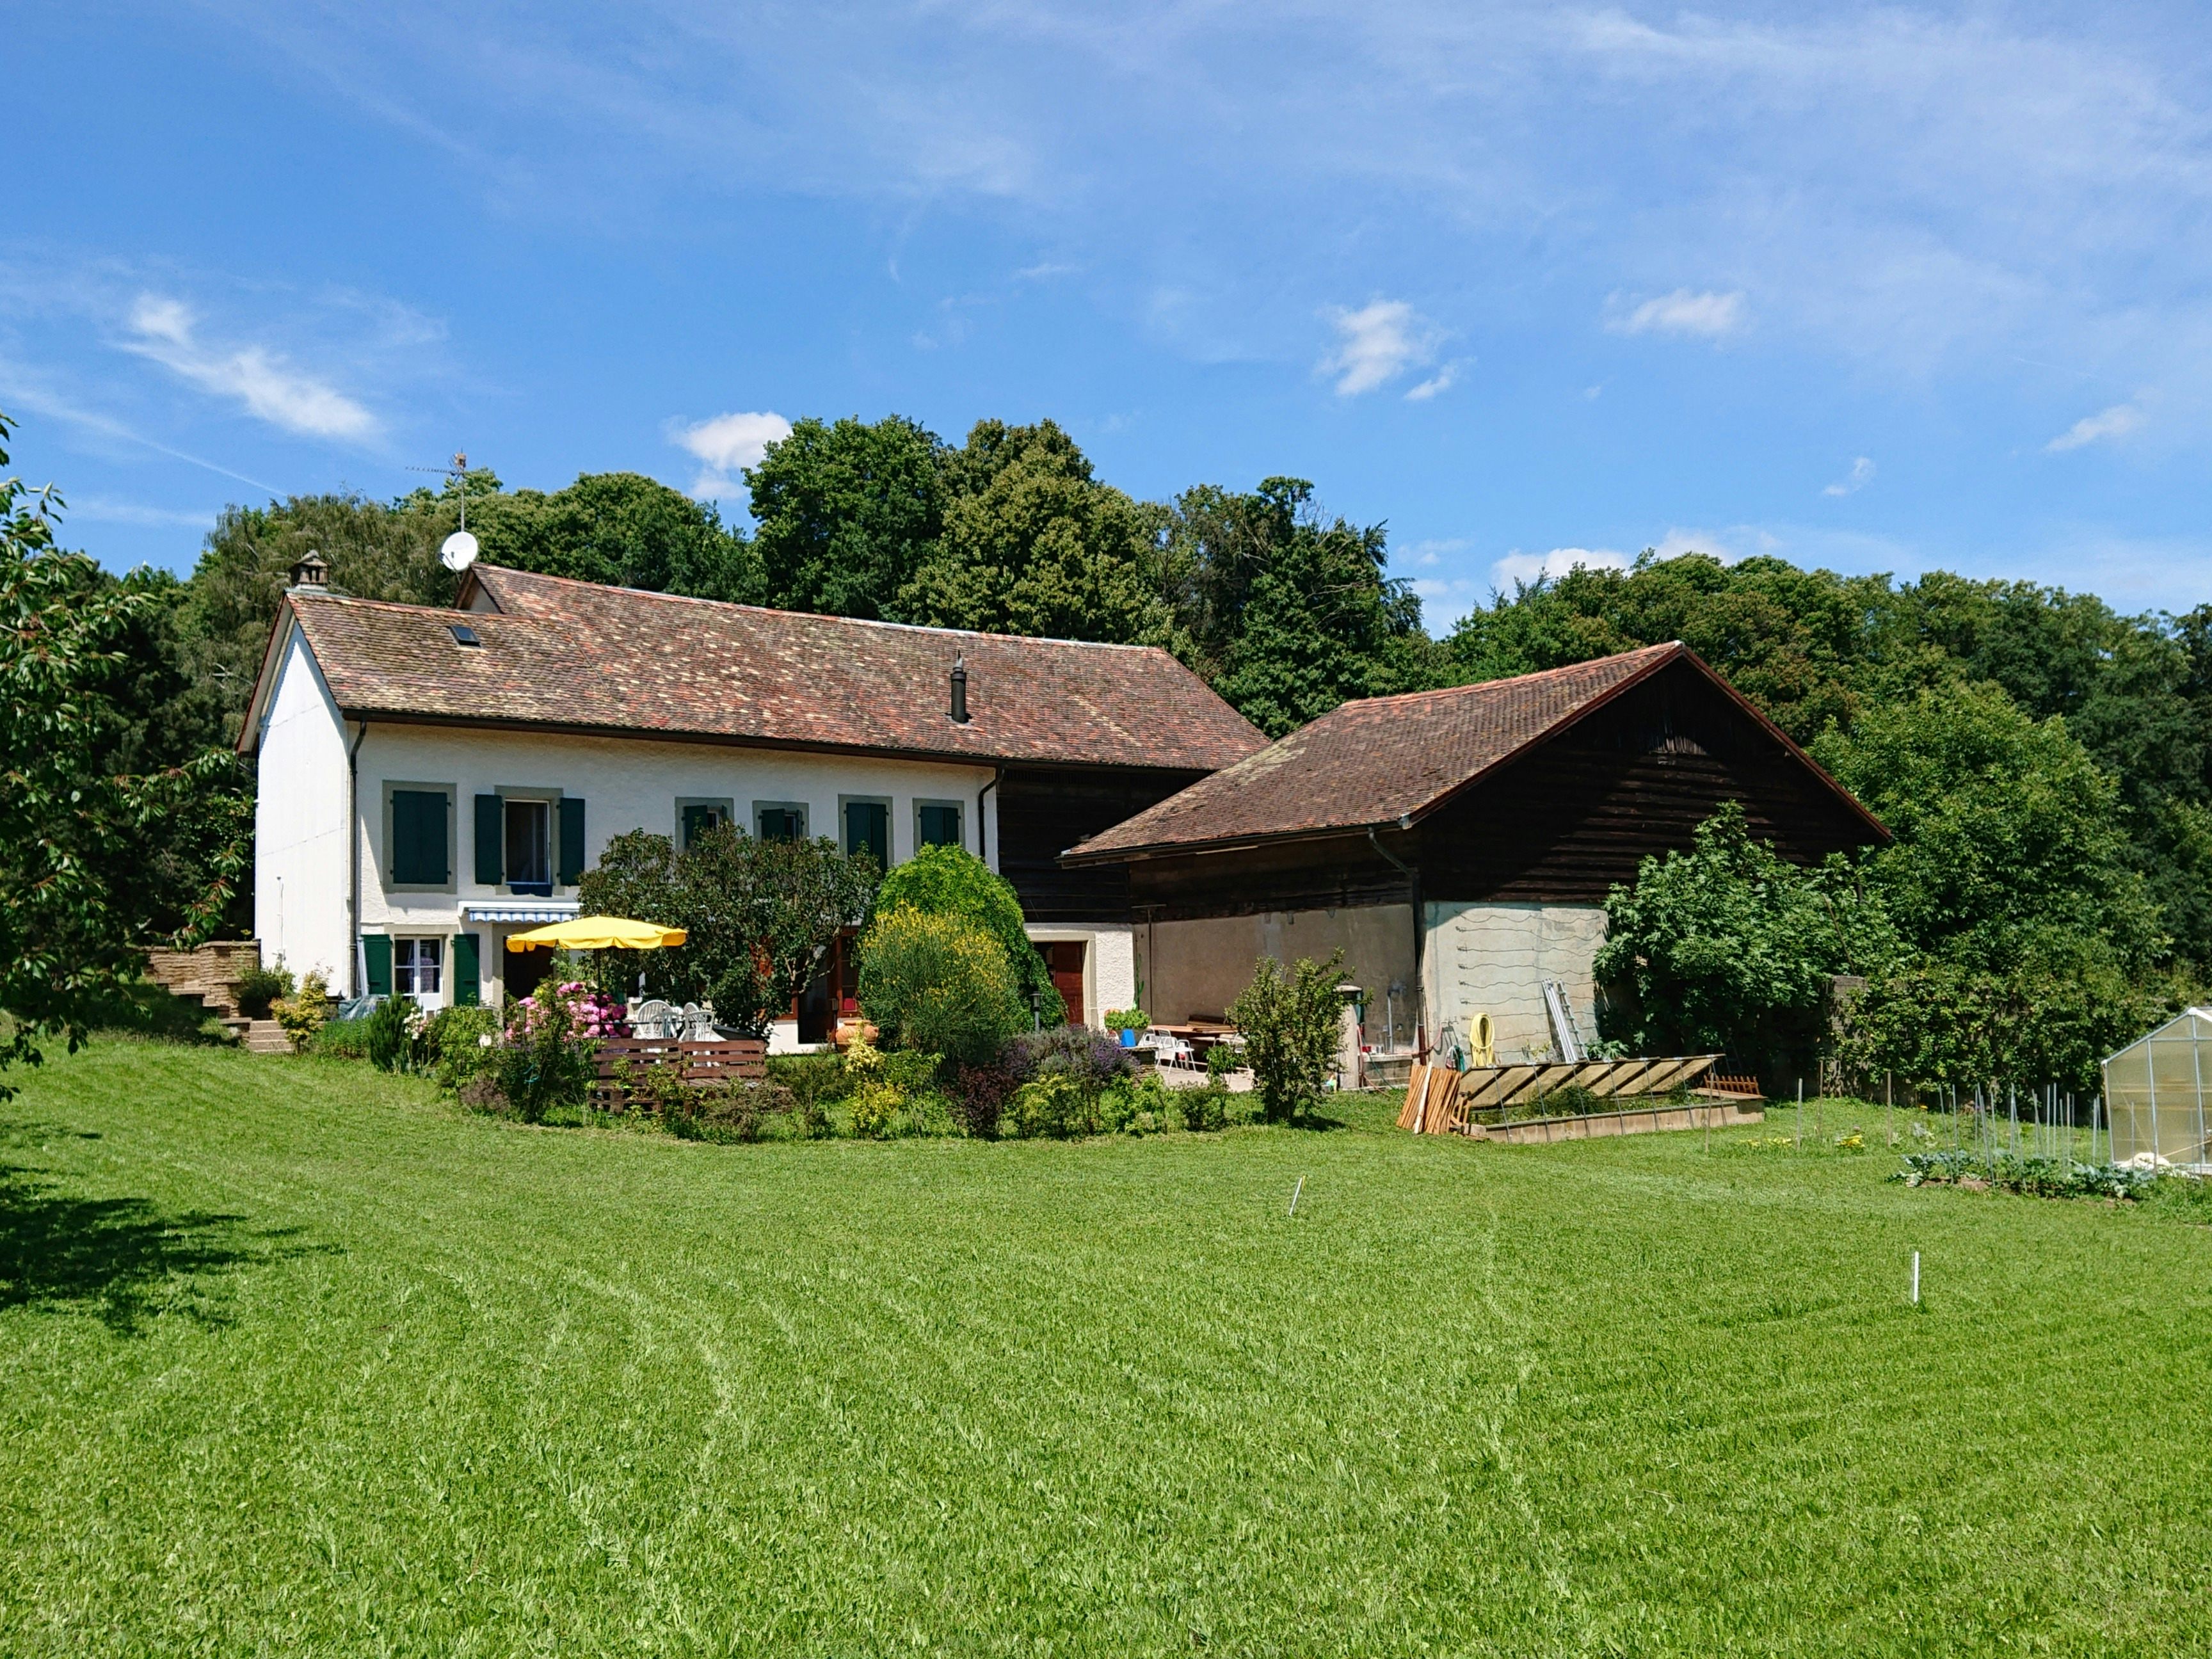 C'doux, Produzent in Saint-Prex Kanton Waadt in der Schweiz